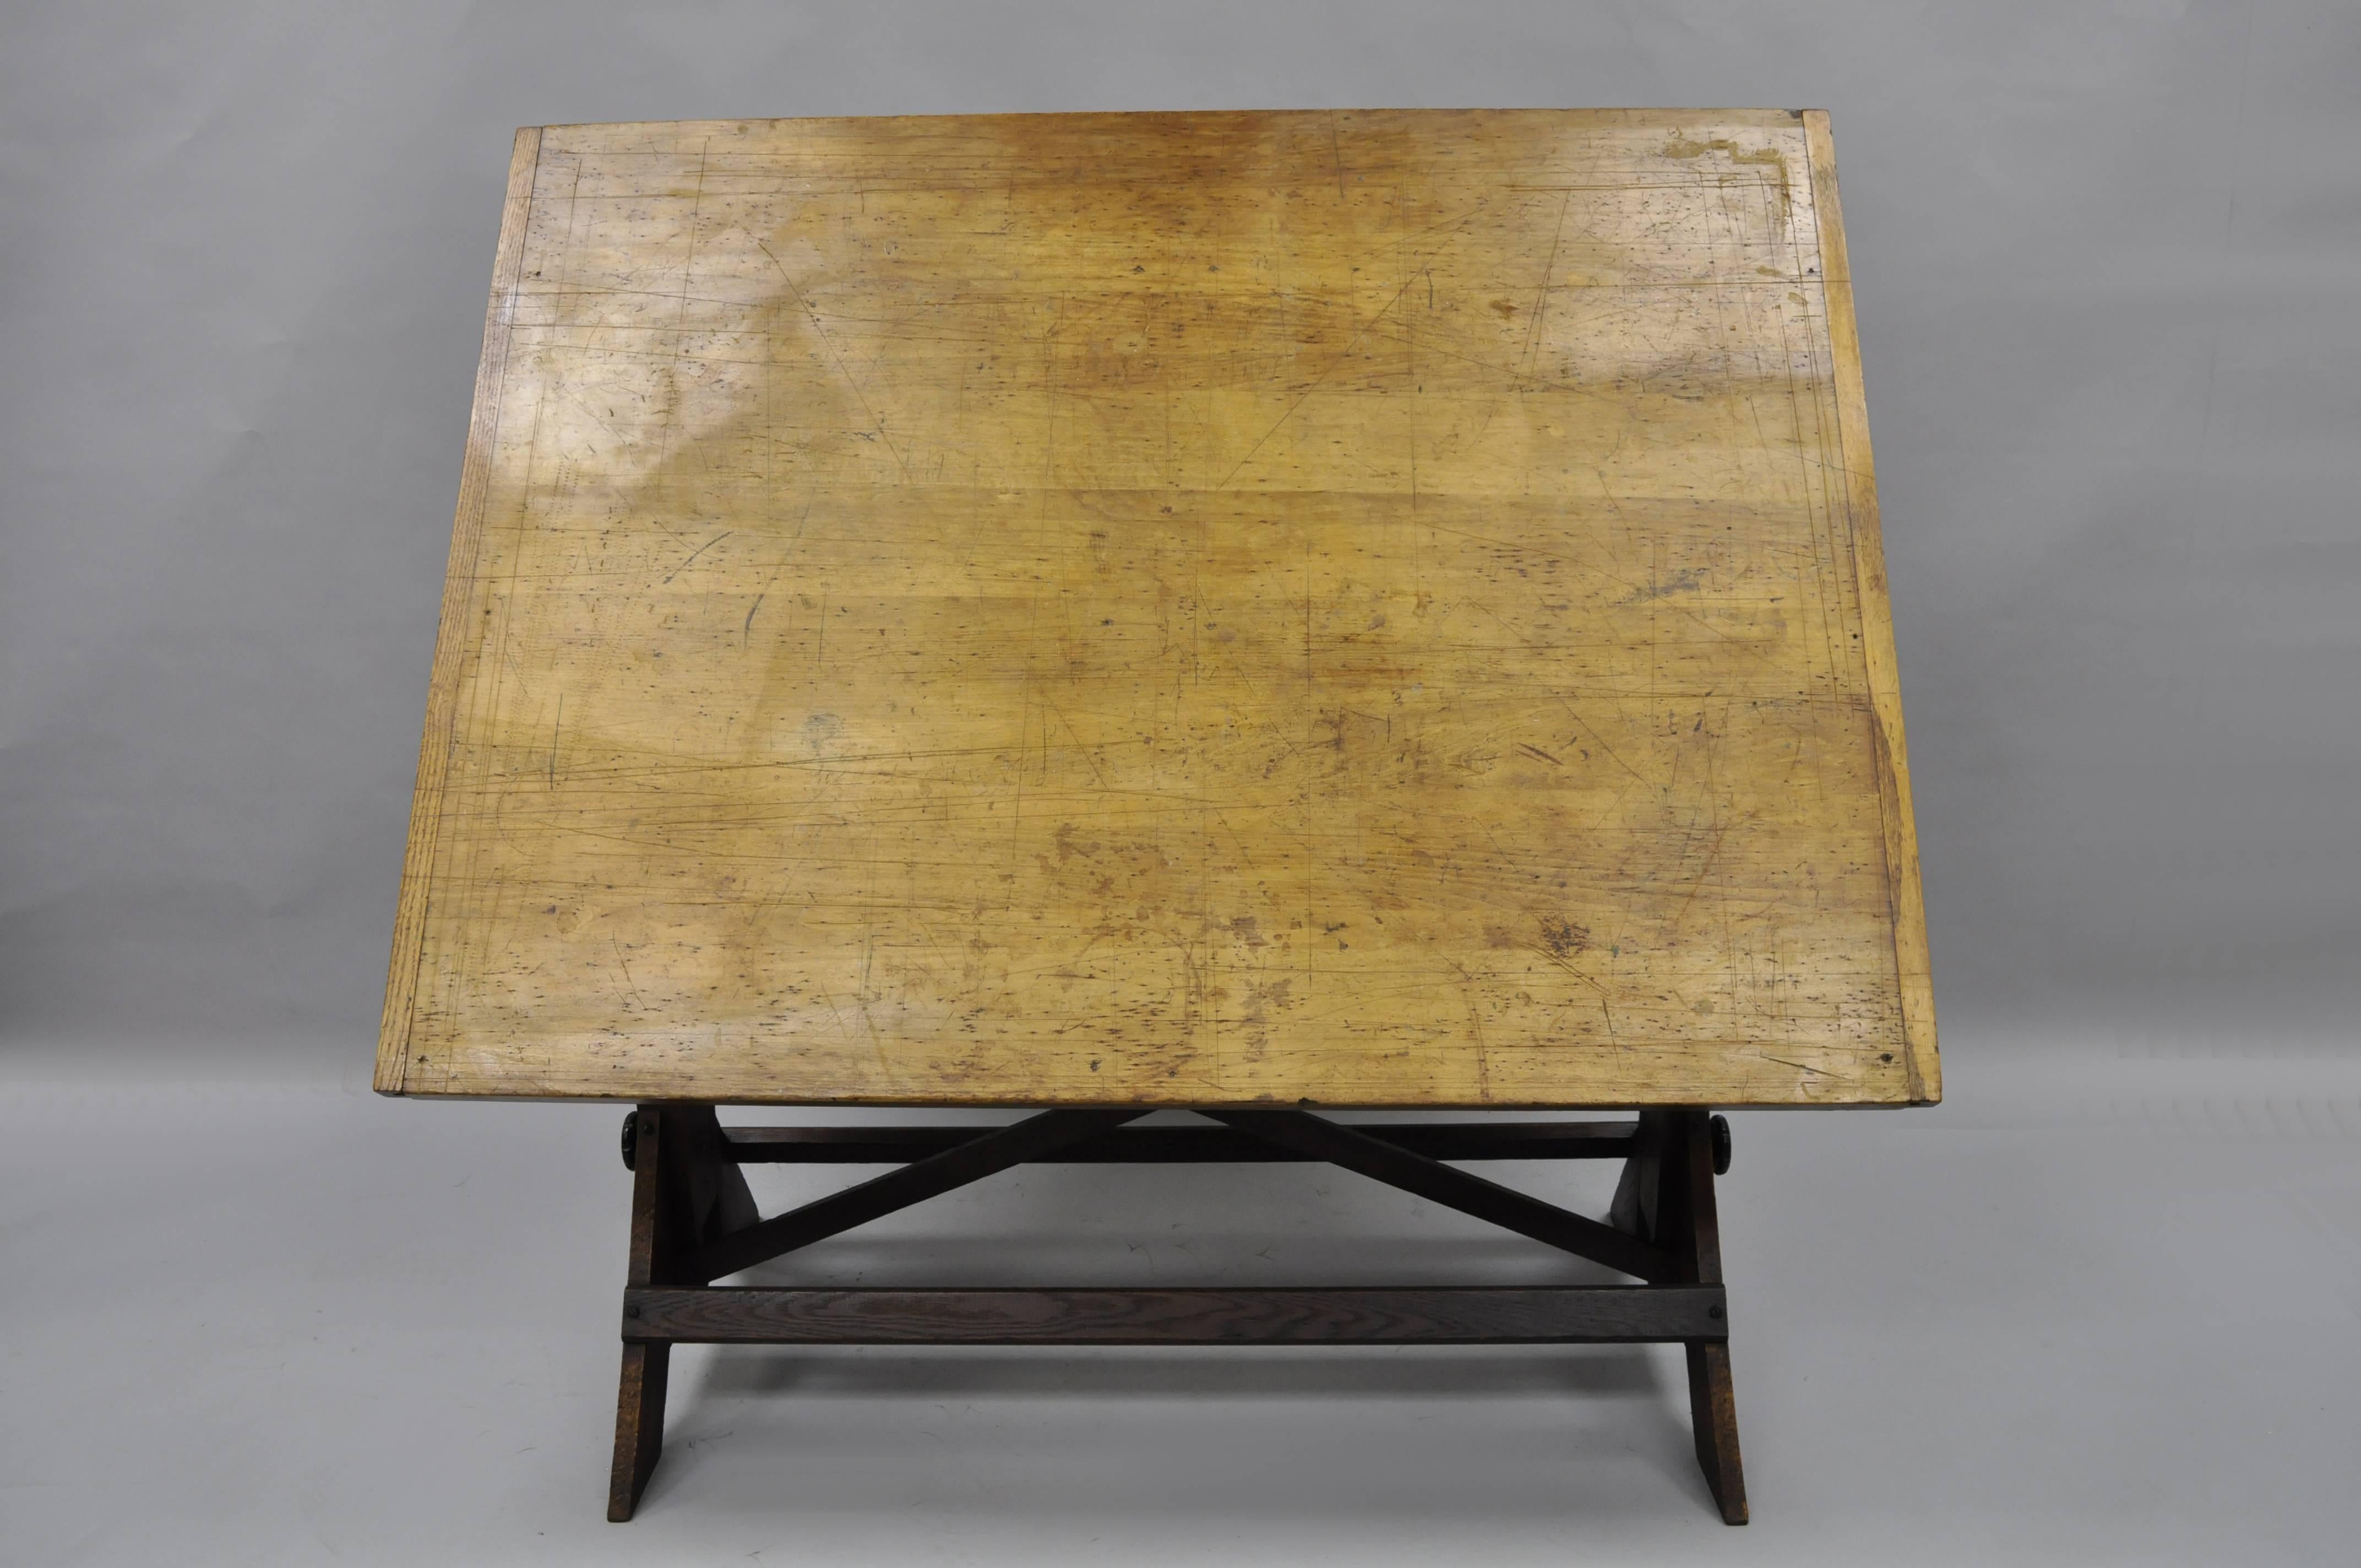 Kolesch & Co Hamilton Mfg Oakwood Cast Iron Drafting Table Artist Desk Antique 2